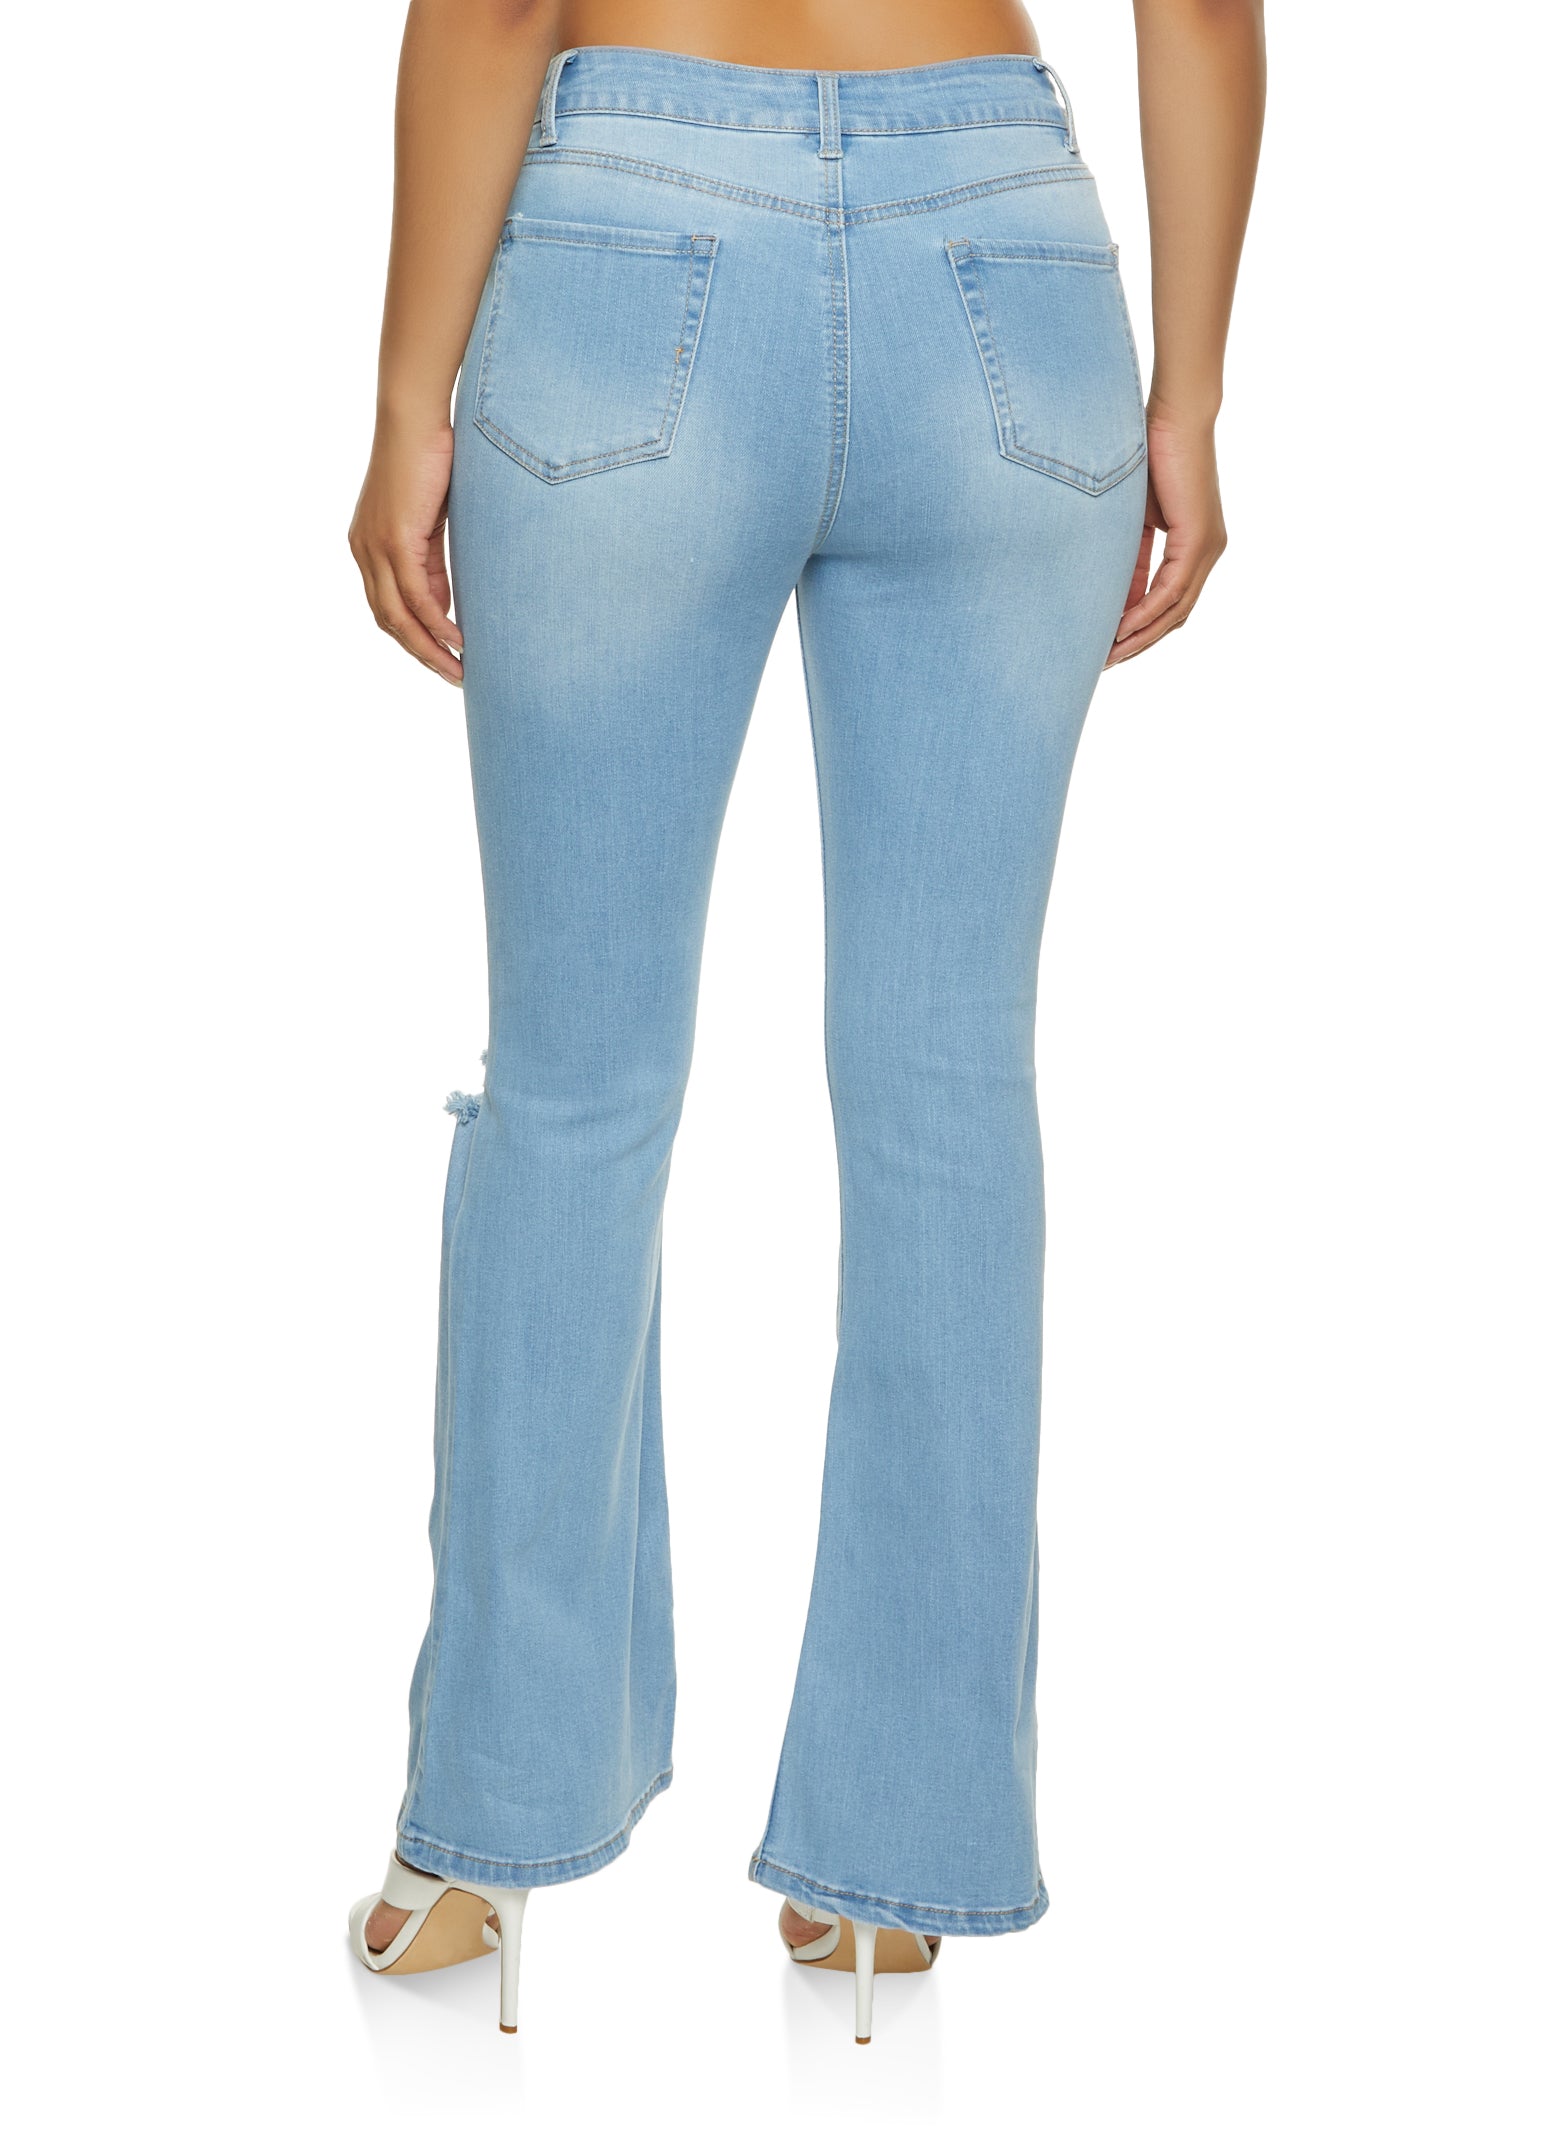 WAX Distressed Flared Jeans